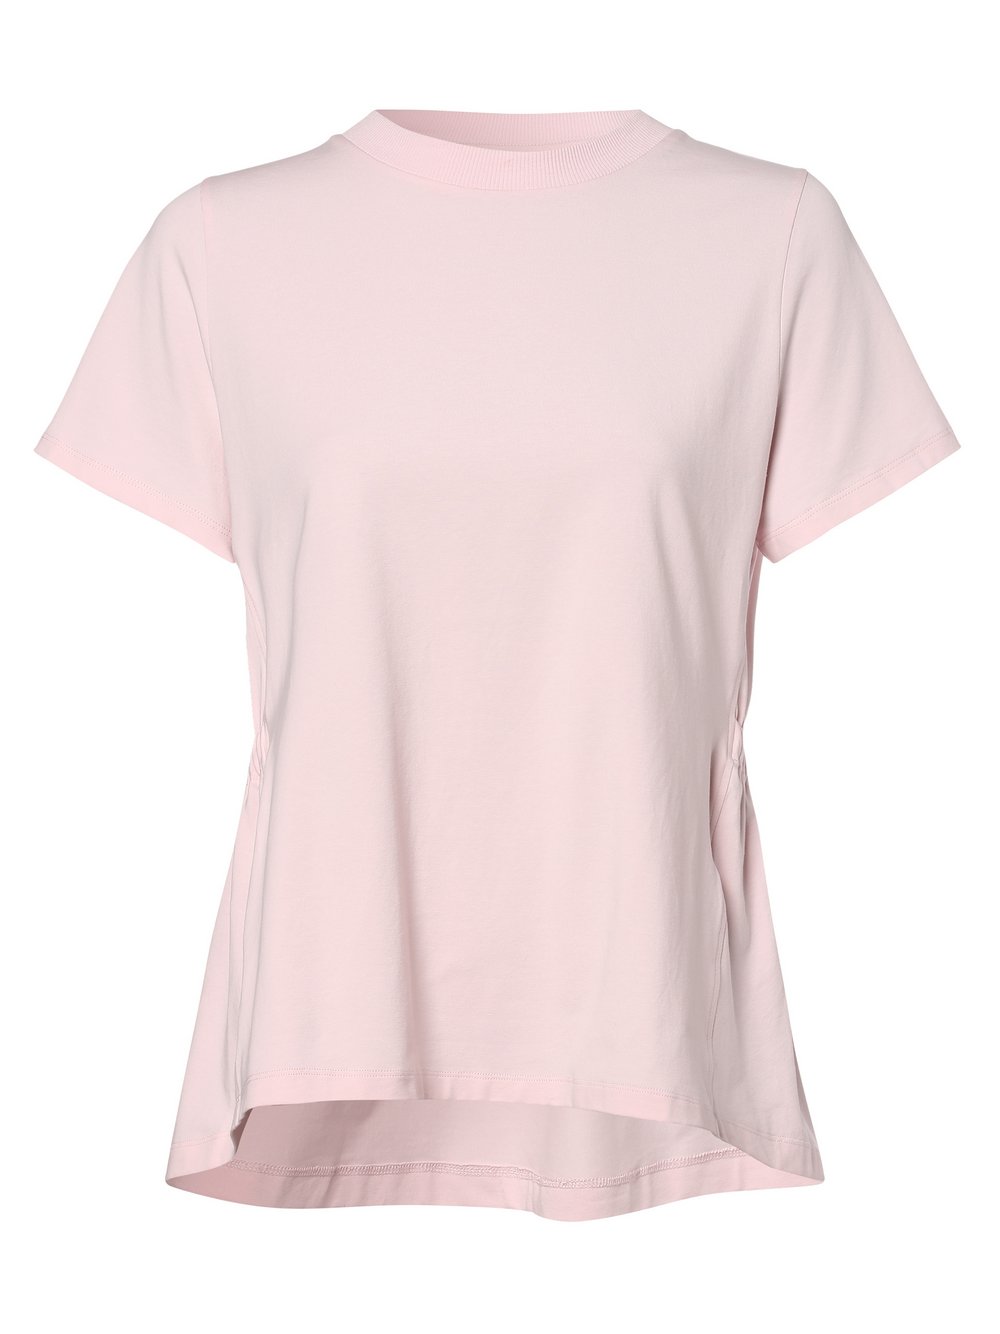 Lovely Sisters - T-shirt damski – Tessa, różowy